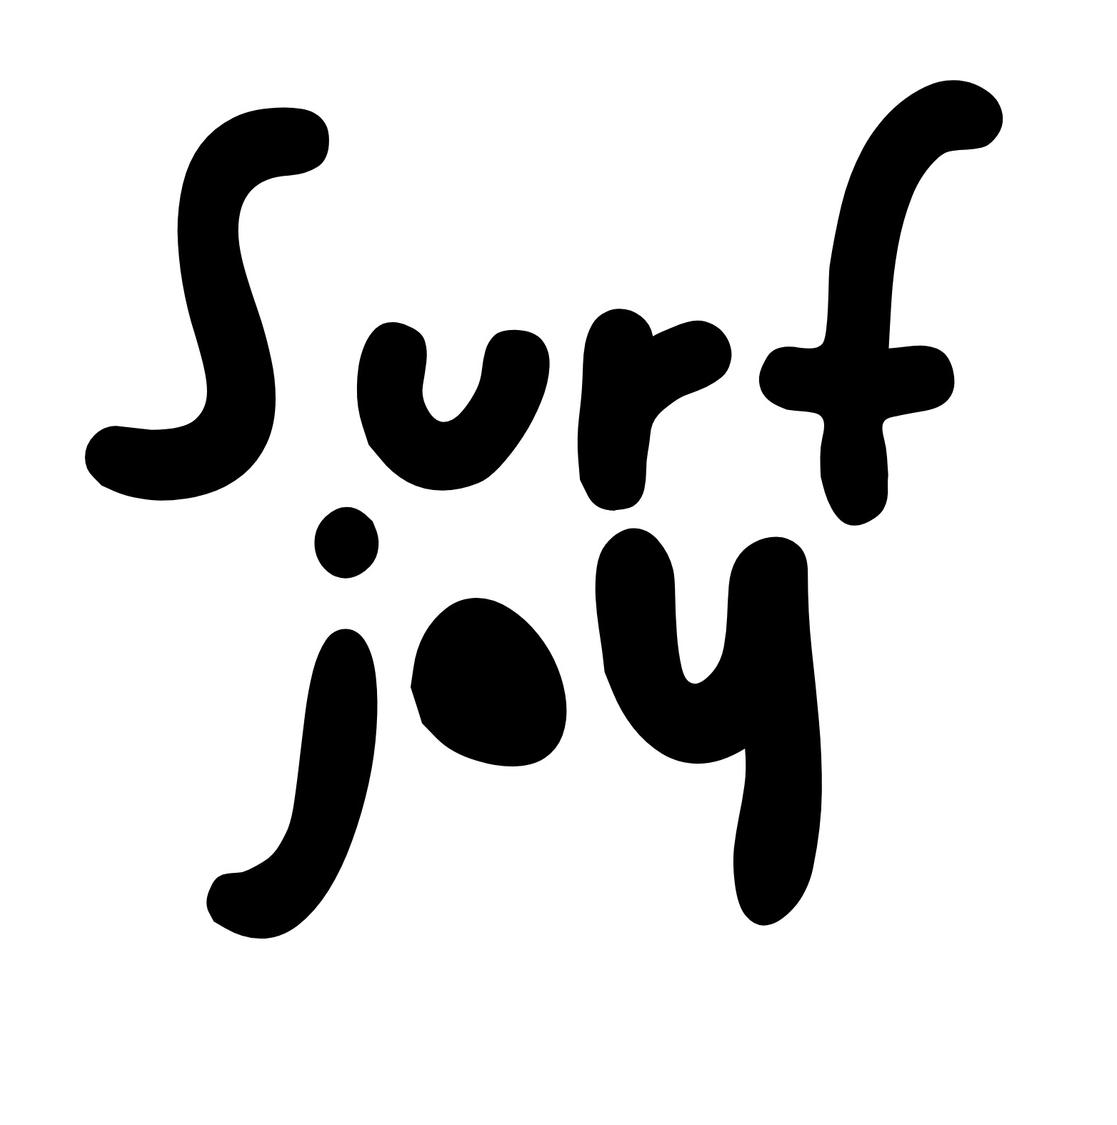 Surfjoy's images